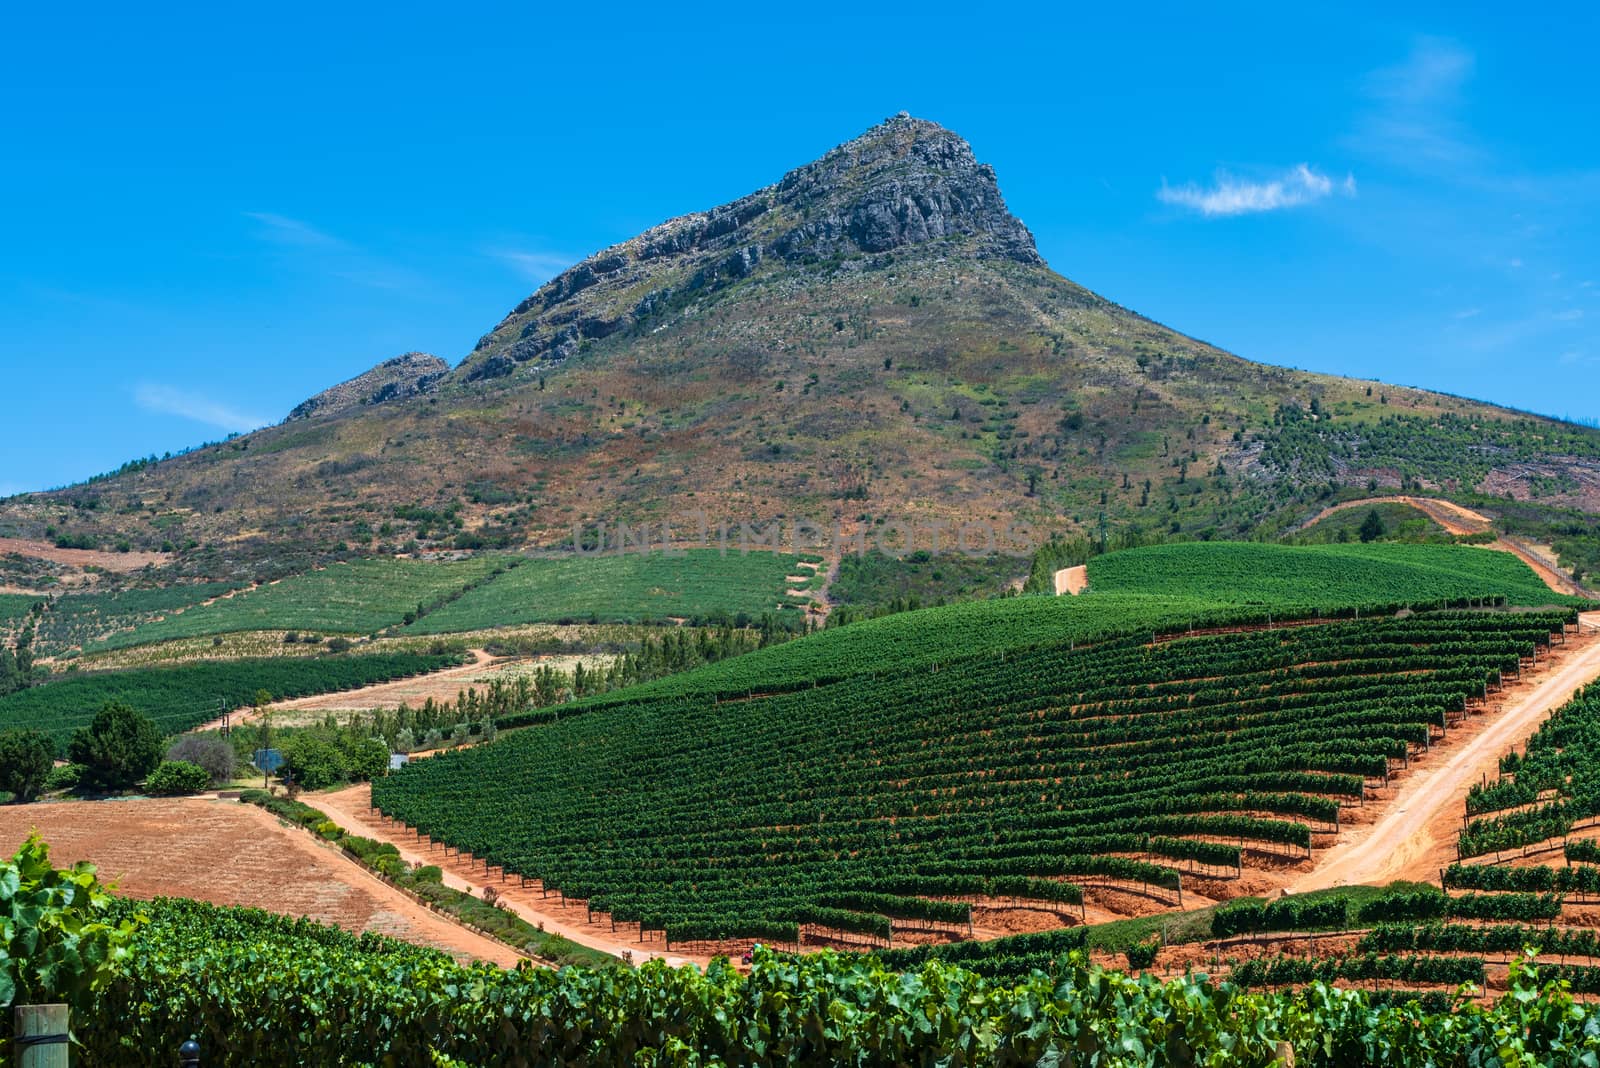 A South African Vineyard by jfbenning